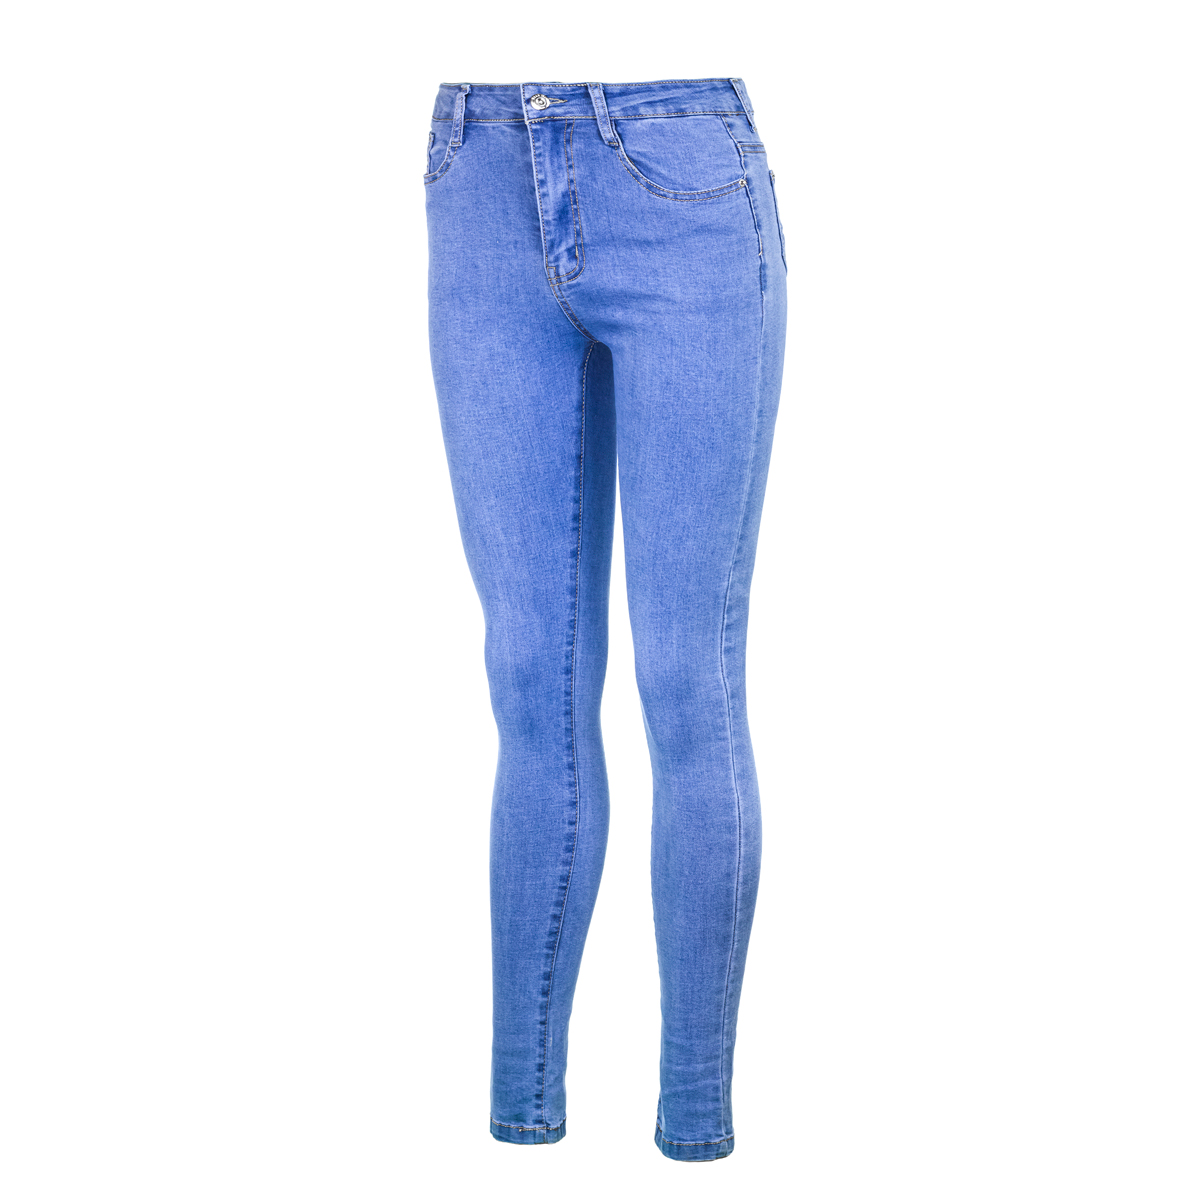 Жен. джинсы арт. 12-0155 Голубой р. 27 Китай, размер 27 - фото 2